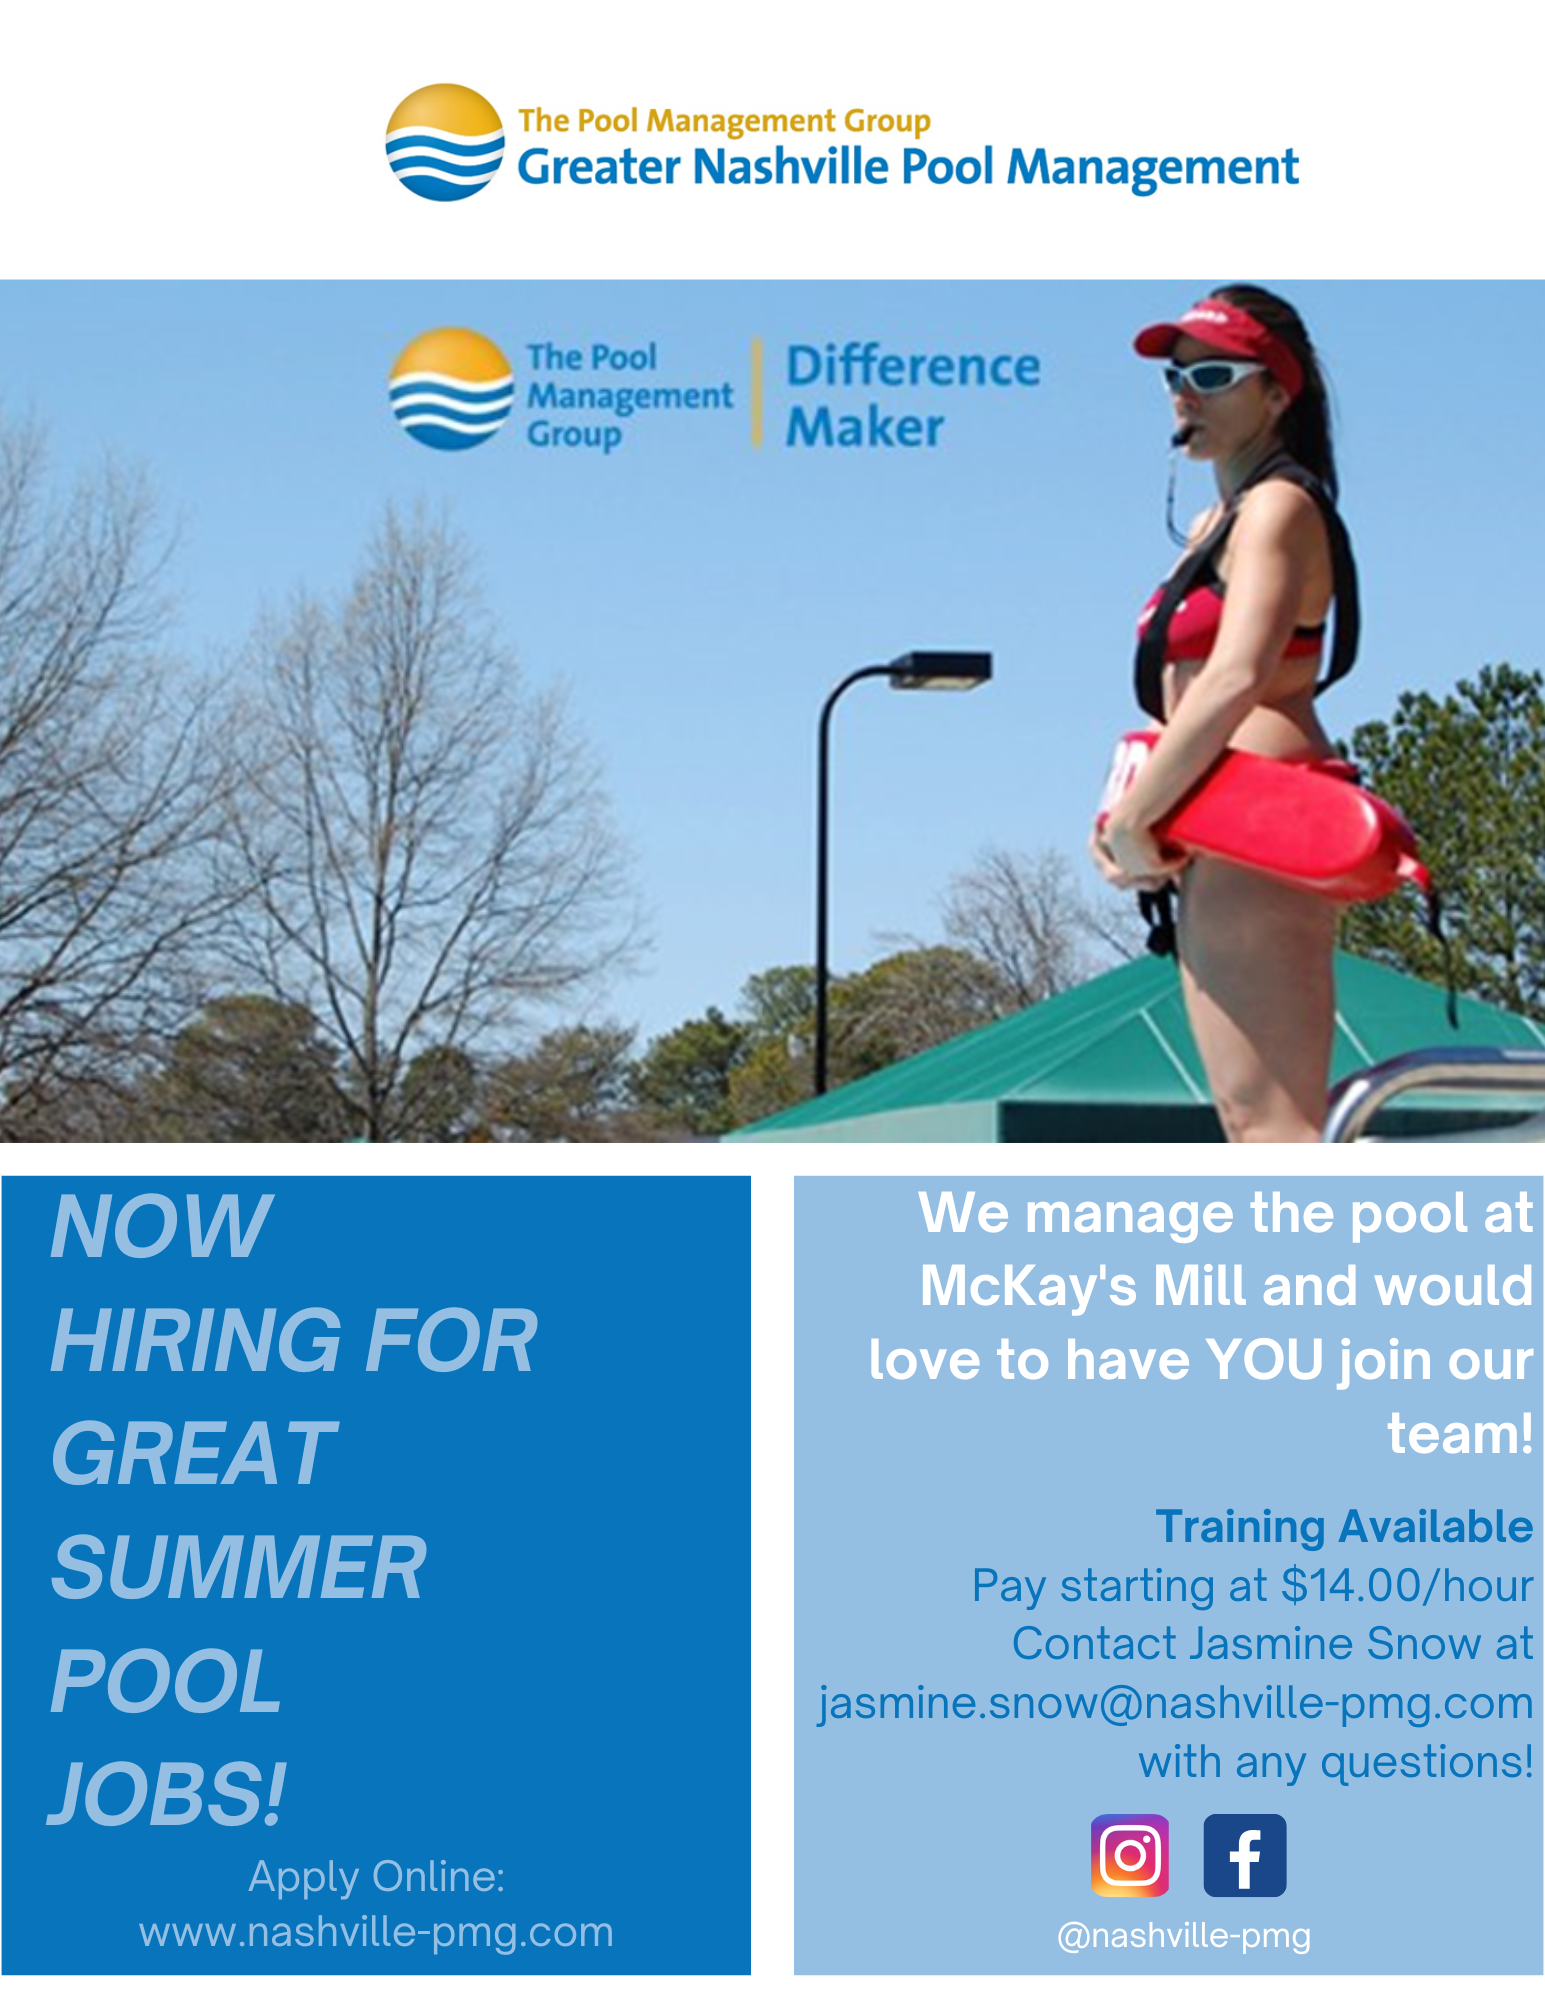 Greater Nashville Pool now hiring for summer pool jobs.